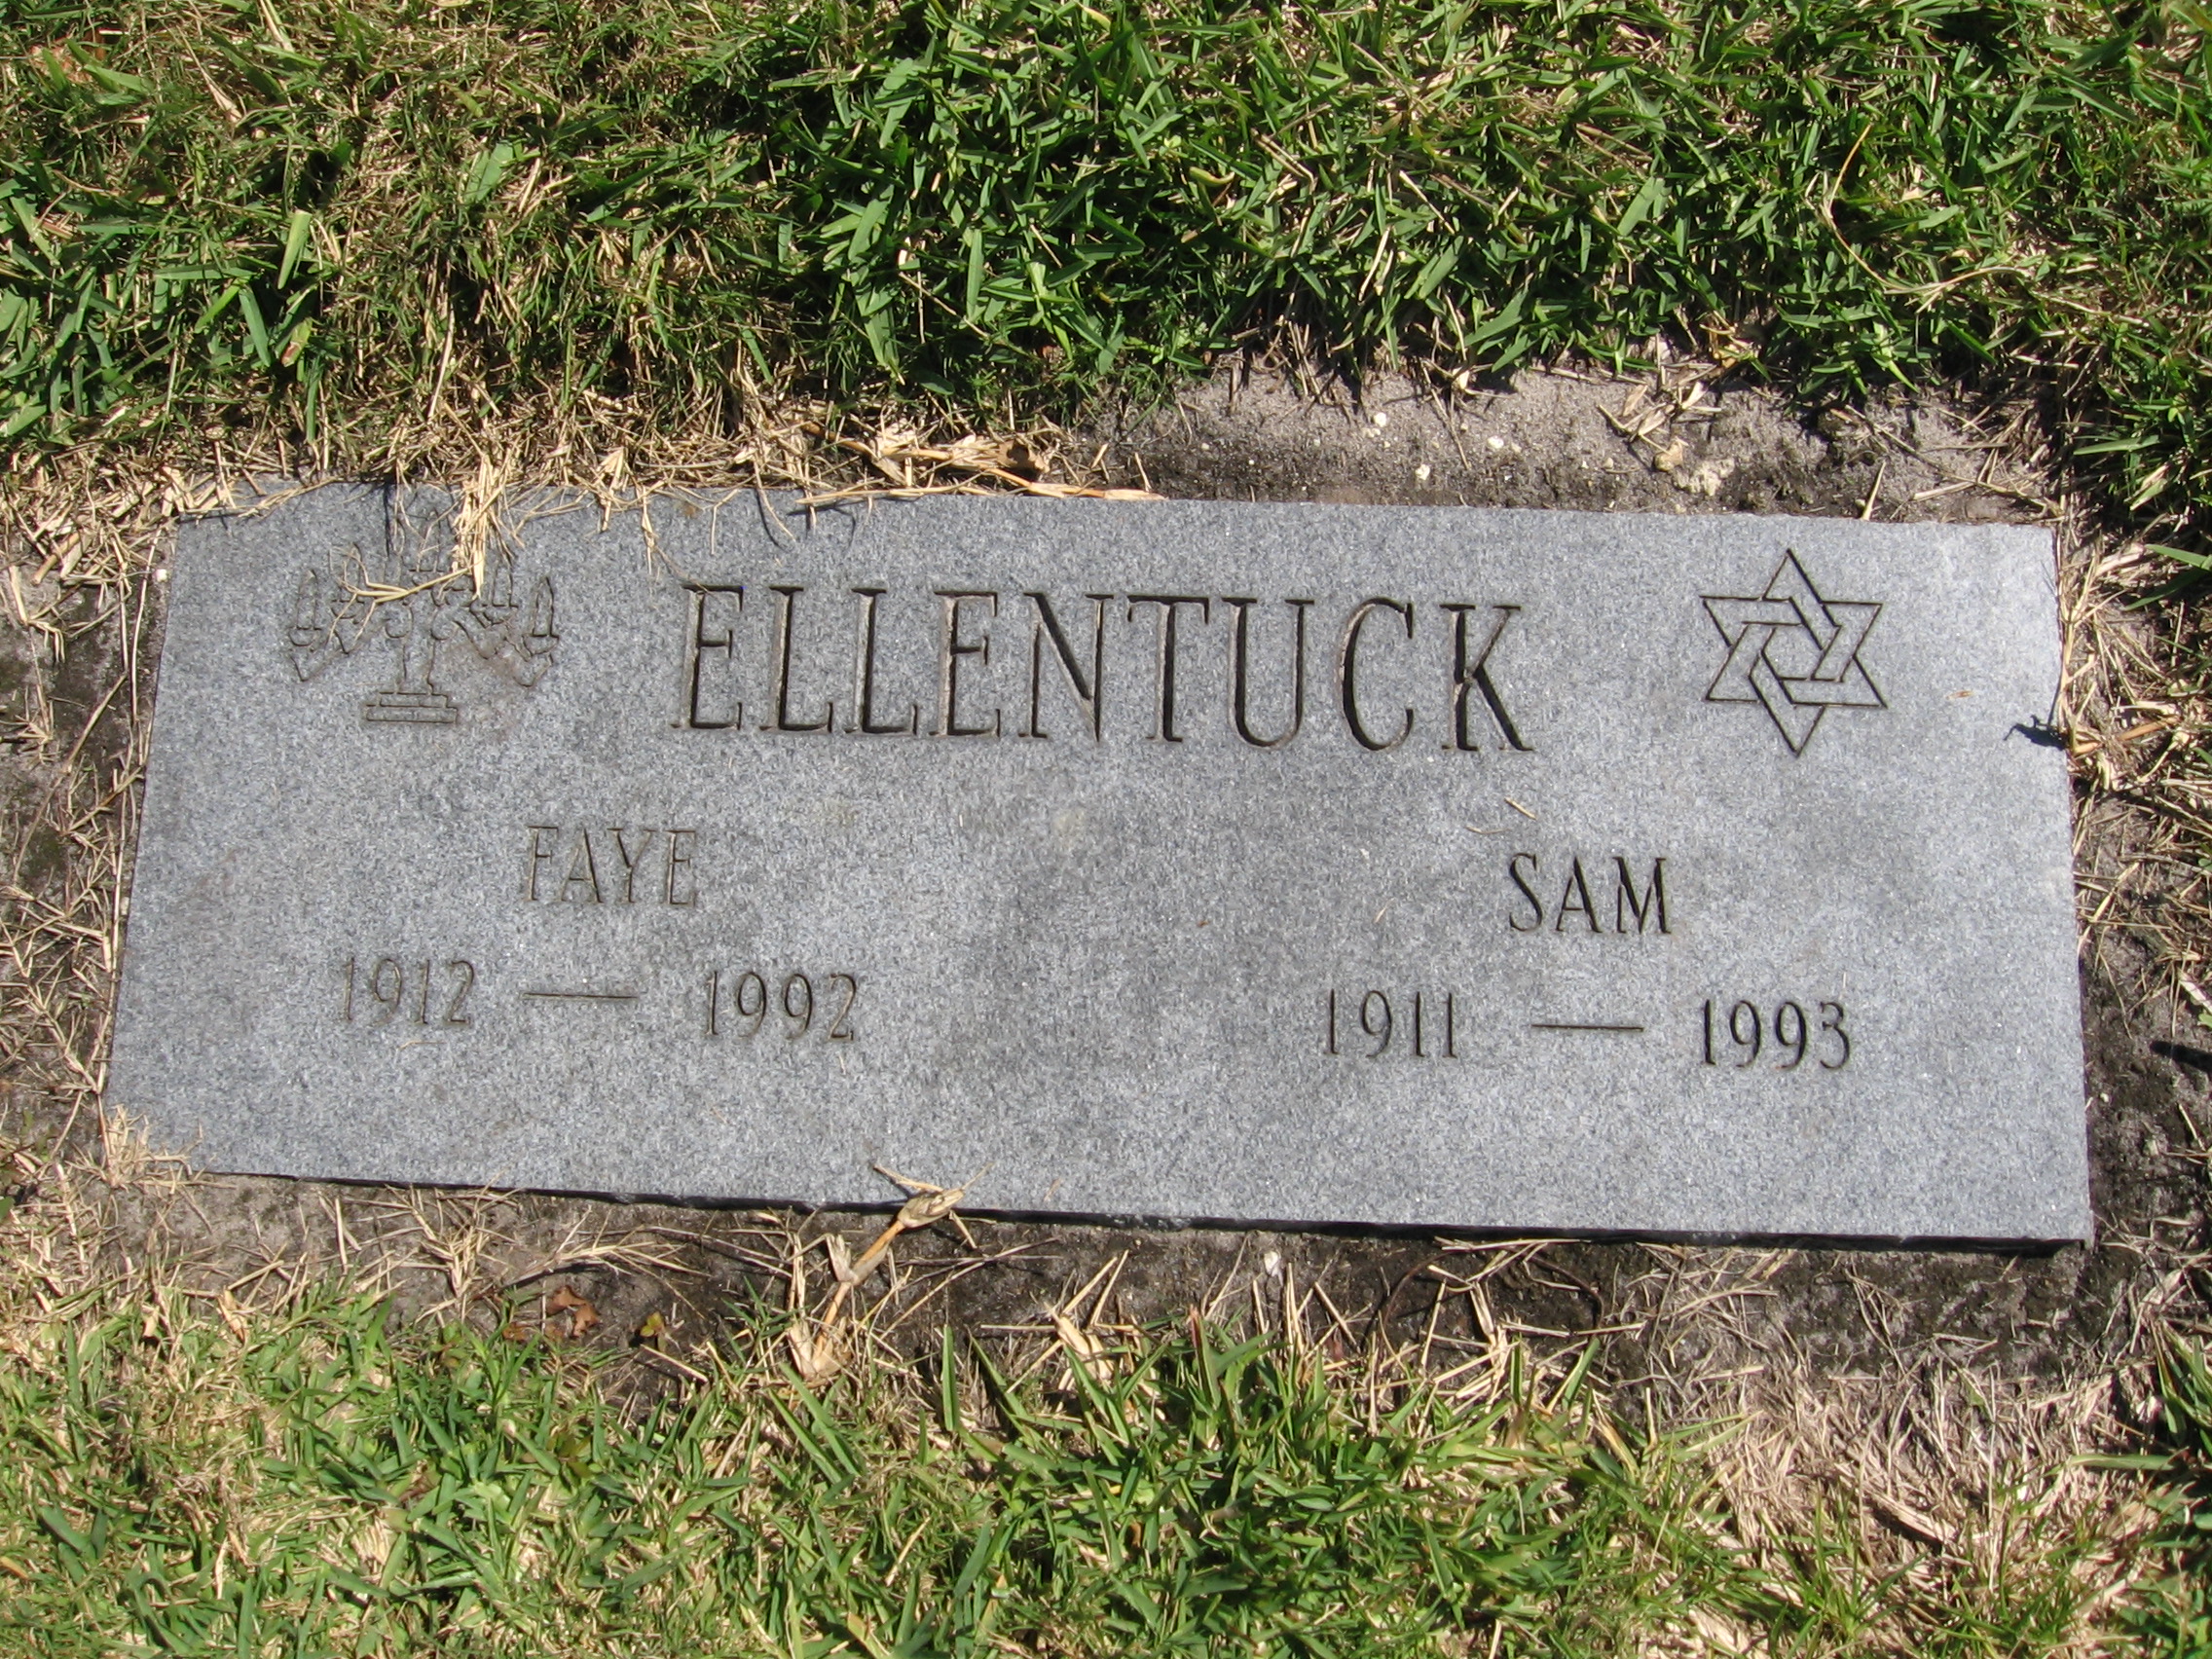 Sam Ellentuck